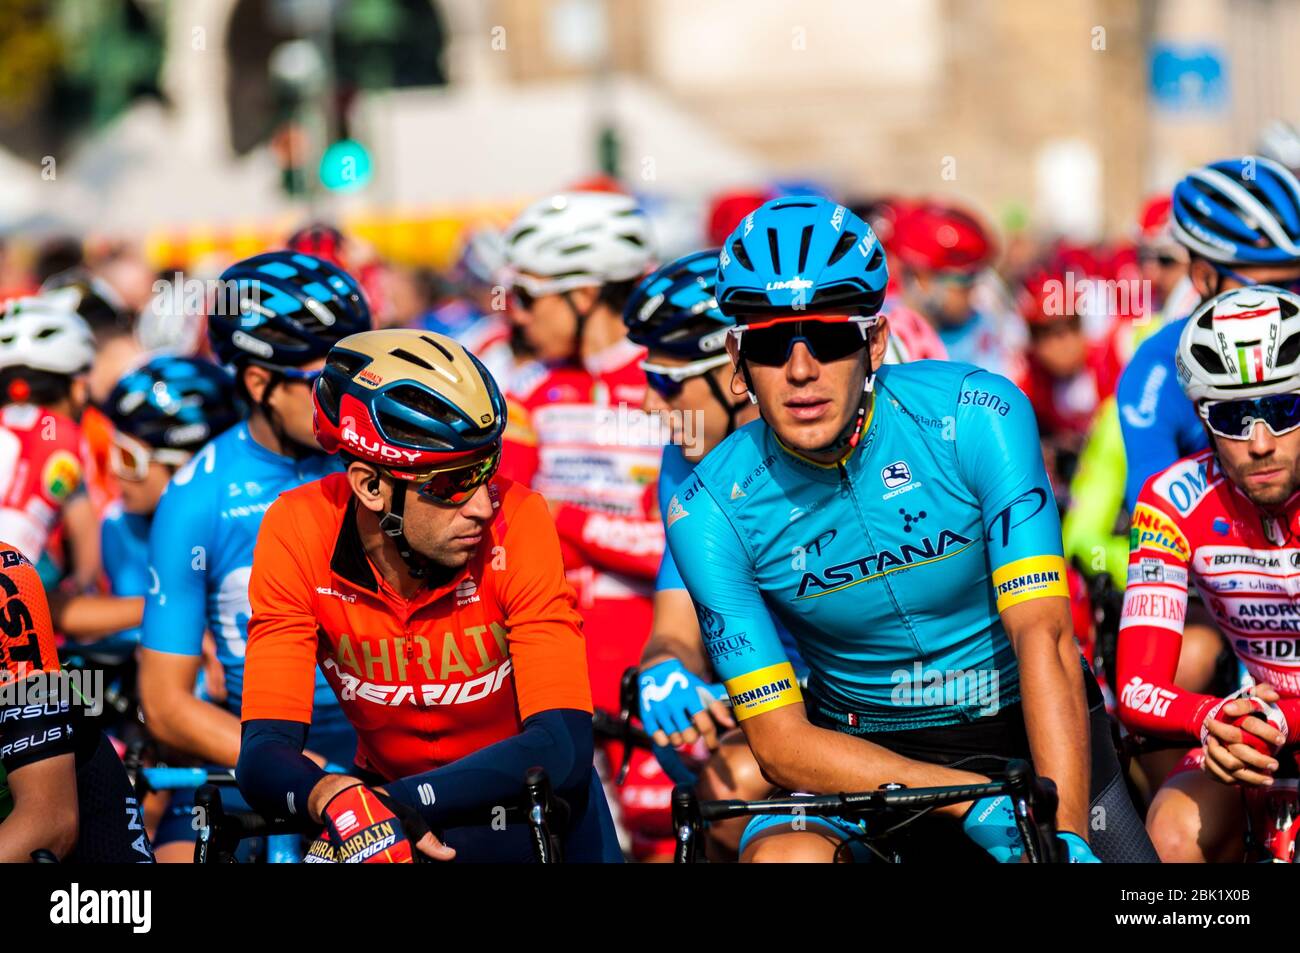 nibali (ita) (bahrain merida) und ballerini (ita) (astana Pro Team) warten auf den Start von 'il lombardia' 2019 während des Giro di Lombardia 2019, bergamo-como Stockfoto